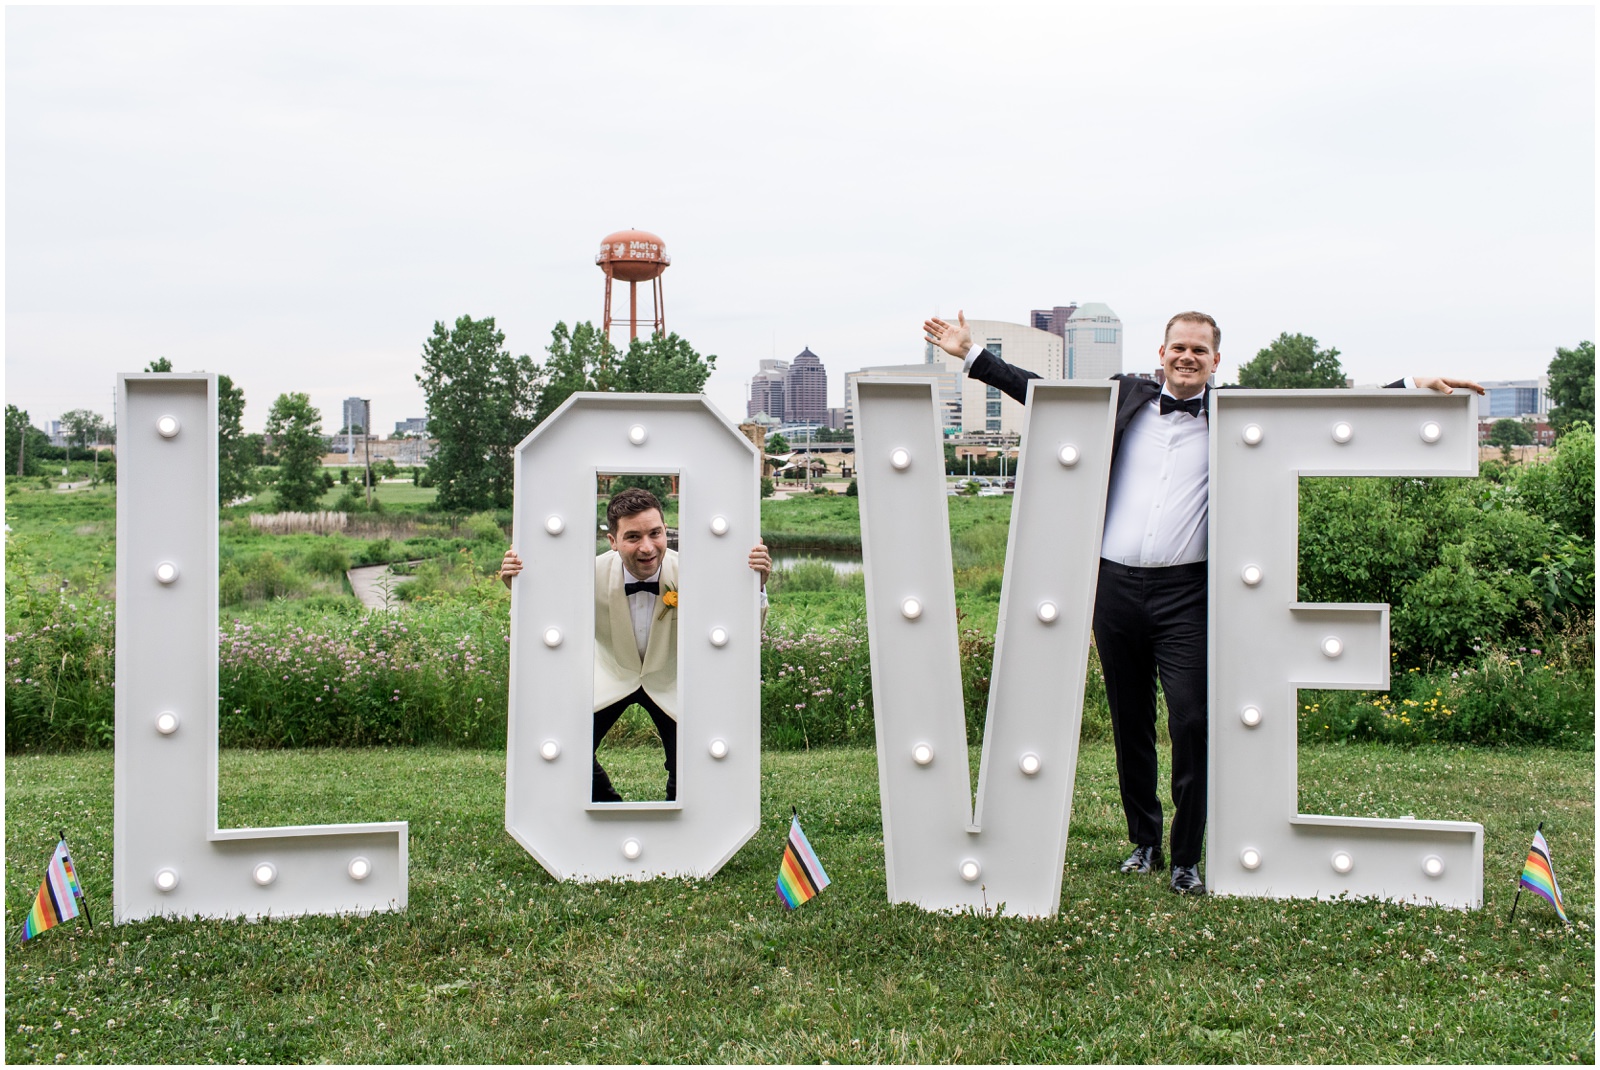 Adam Lowe Photography, gay wedding, Audubon center, Columbus, Ohio, style, love, LGBTQ wedding